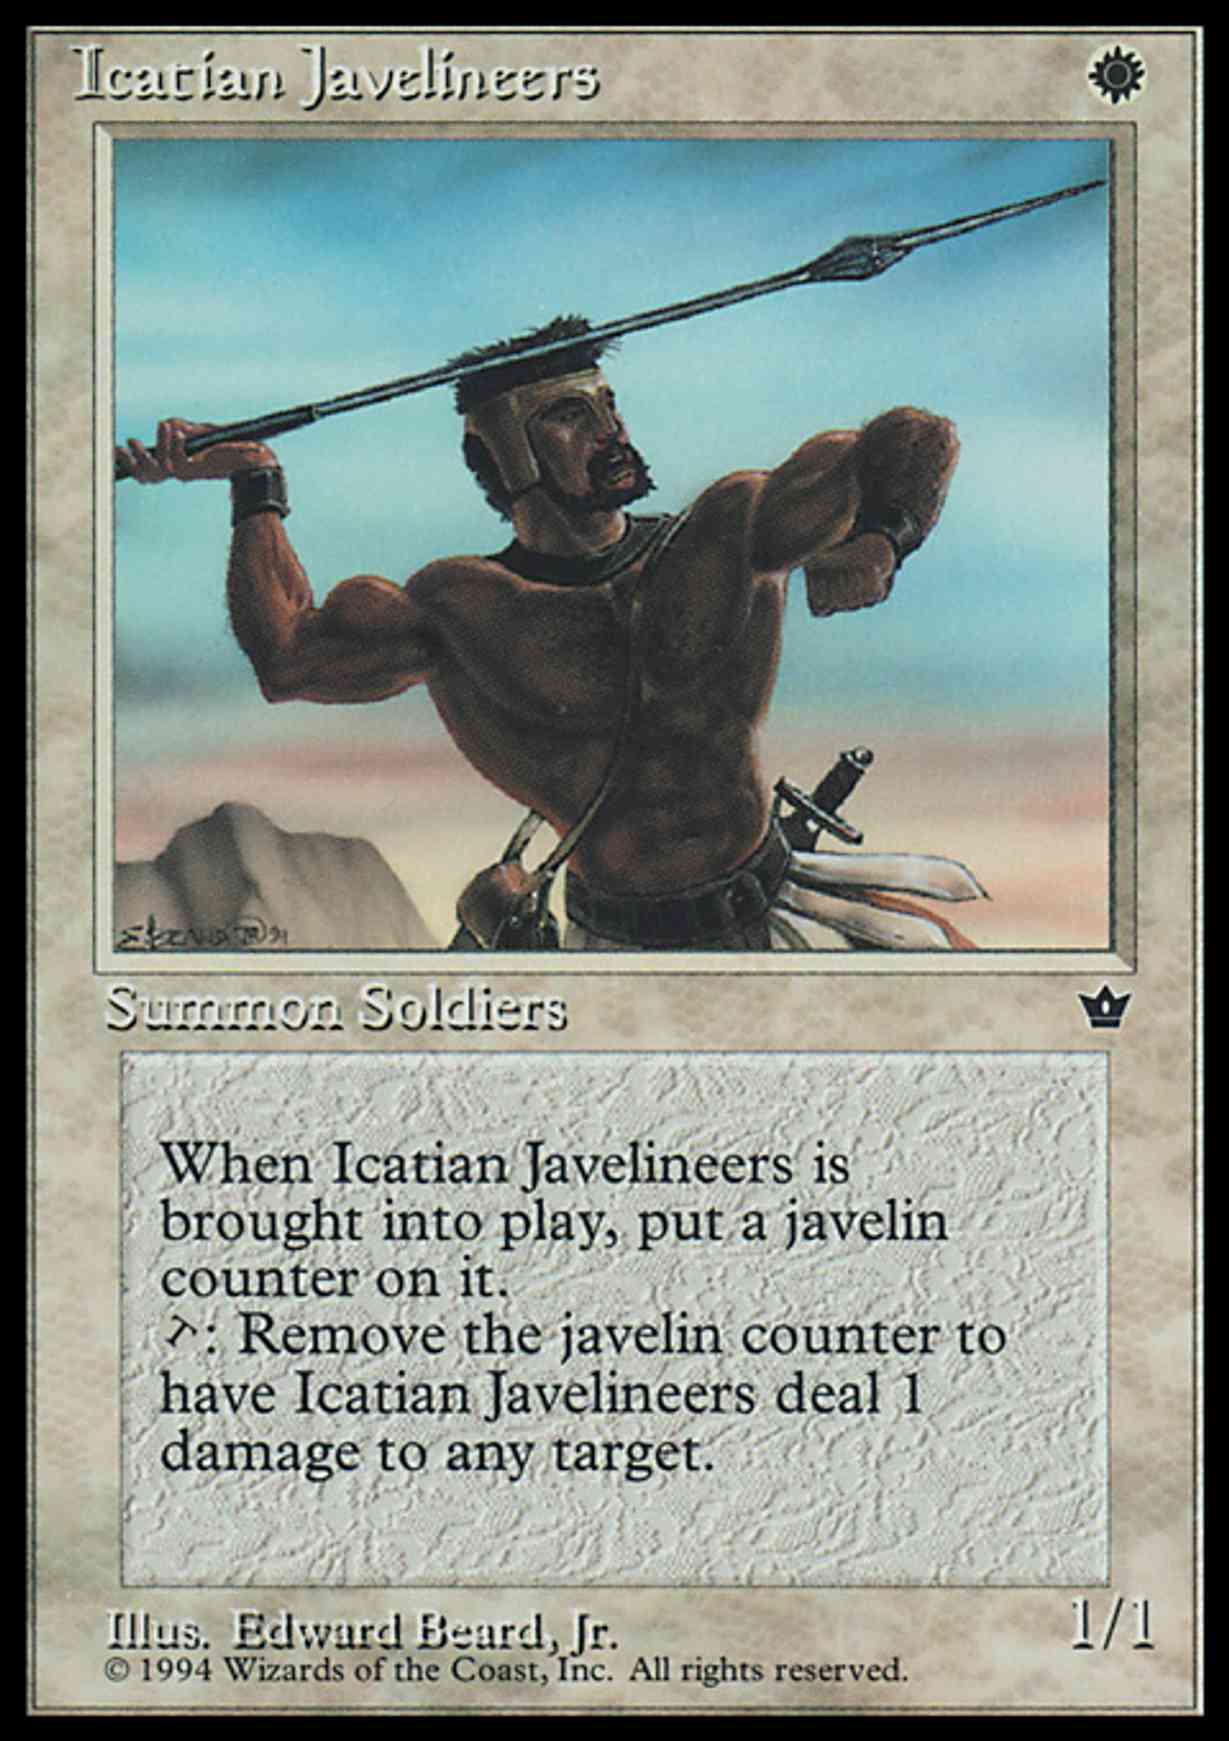 Icatian Javelineers (Beard Jr.) magic card front